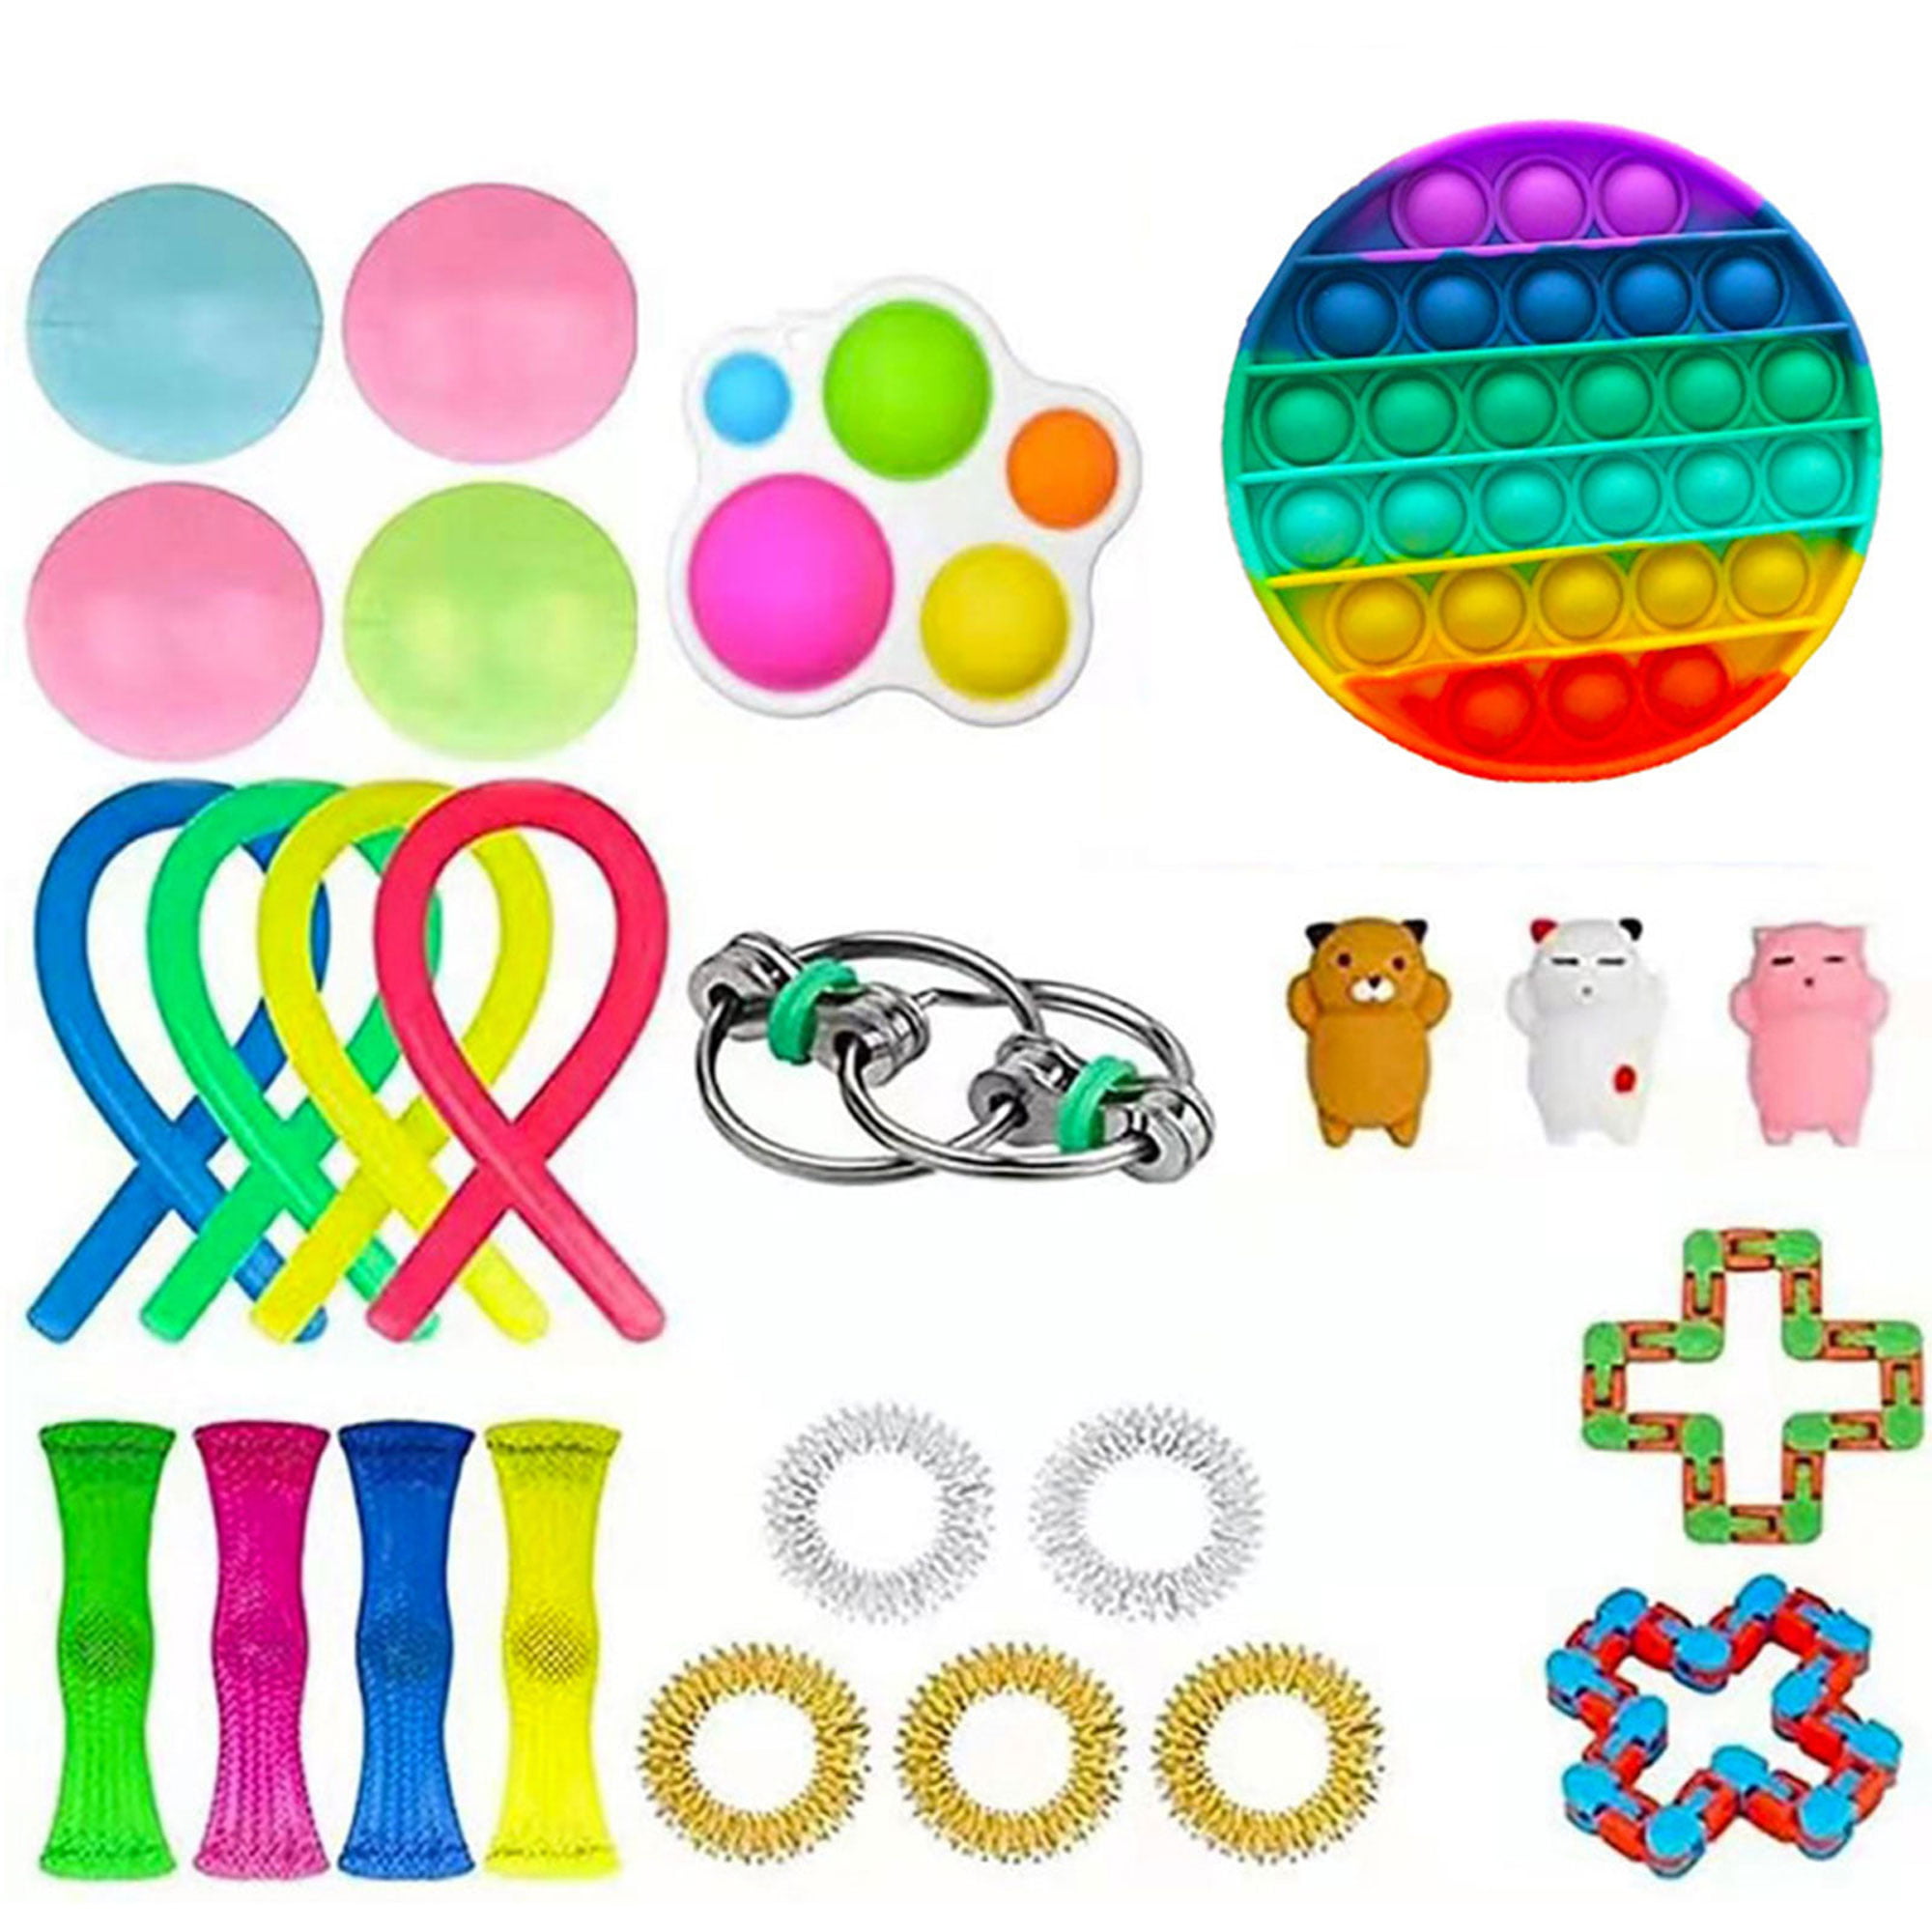 Details about   Fidget Toys Set Kit Sensory Tools Bundle Stress Relief Hand Toy Kids Adults Gift 